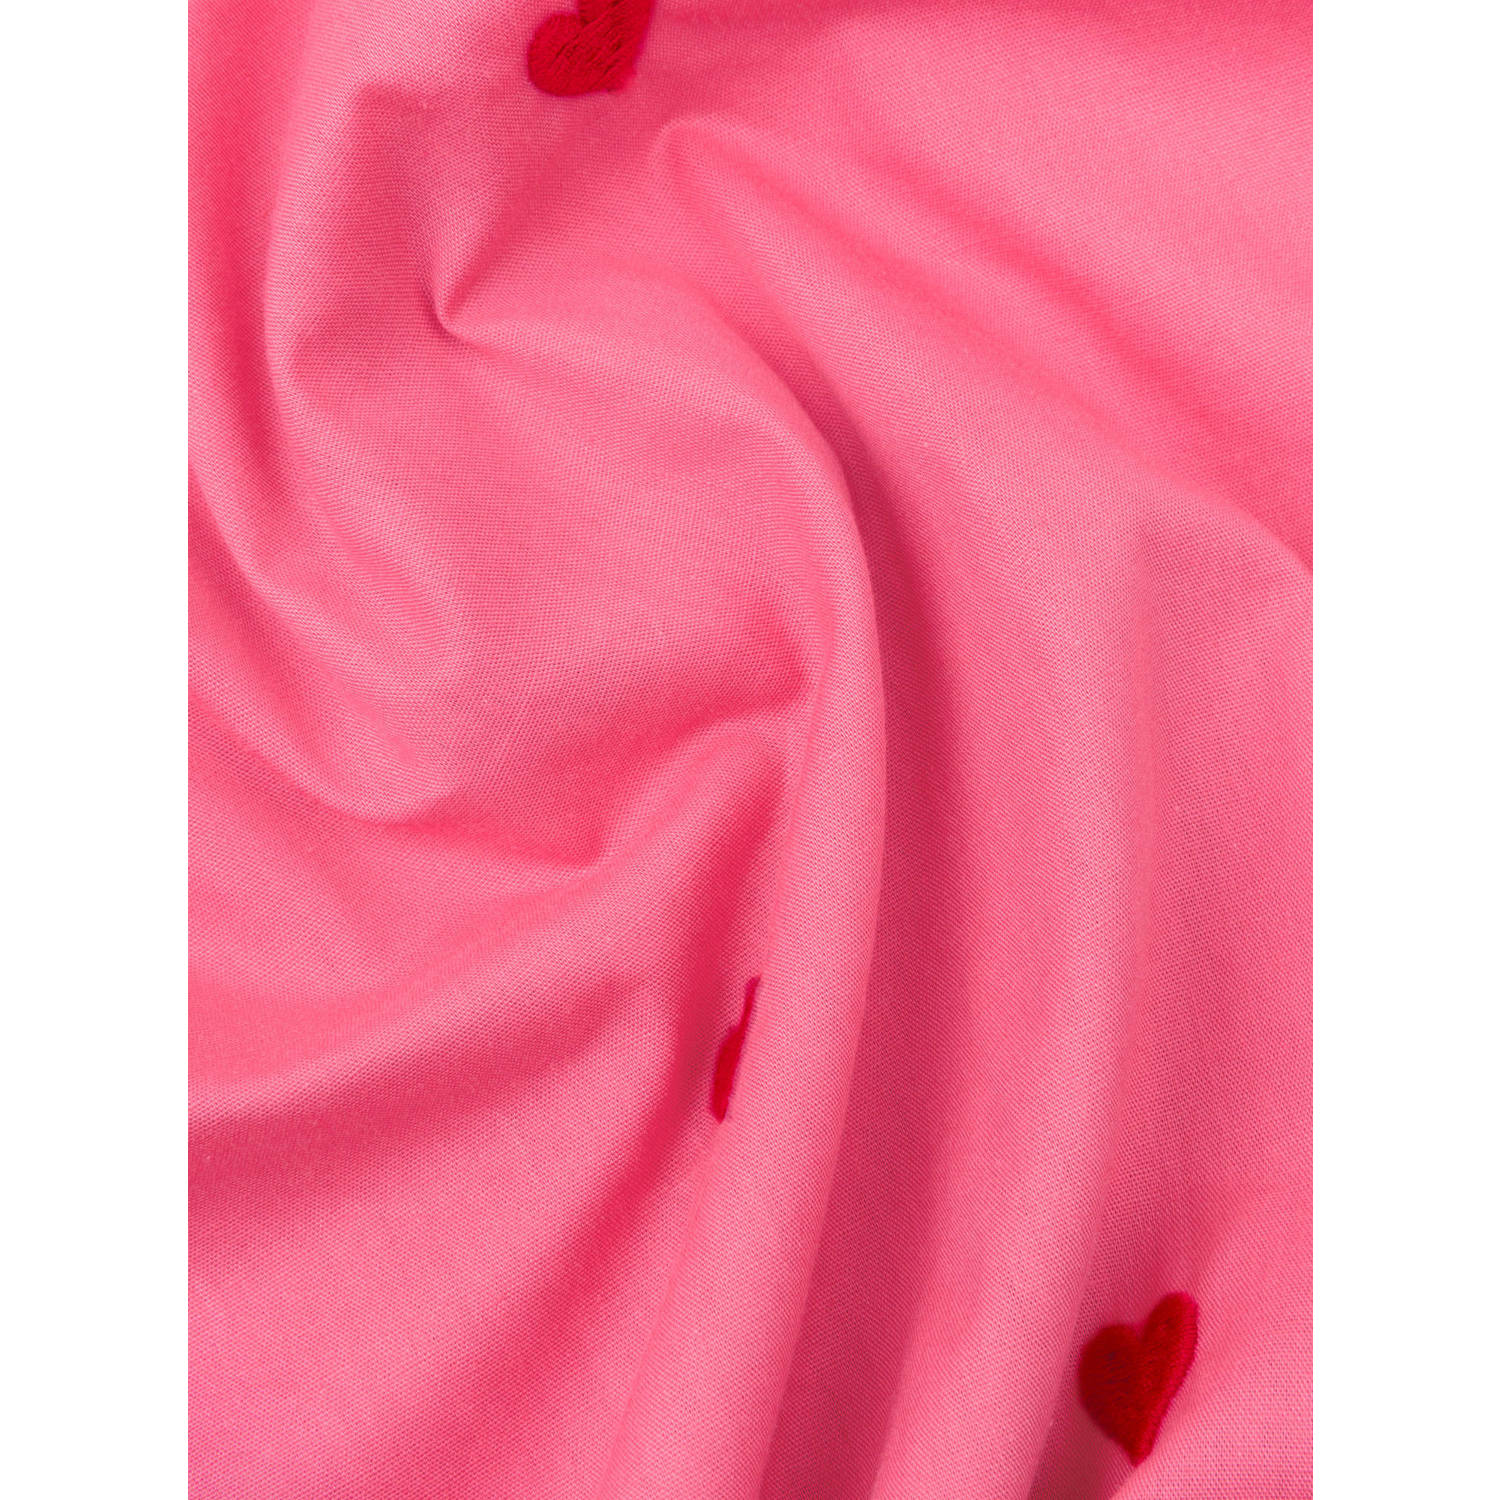 Ydence jurk Sylvie met hartjes en borduursels roze rood